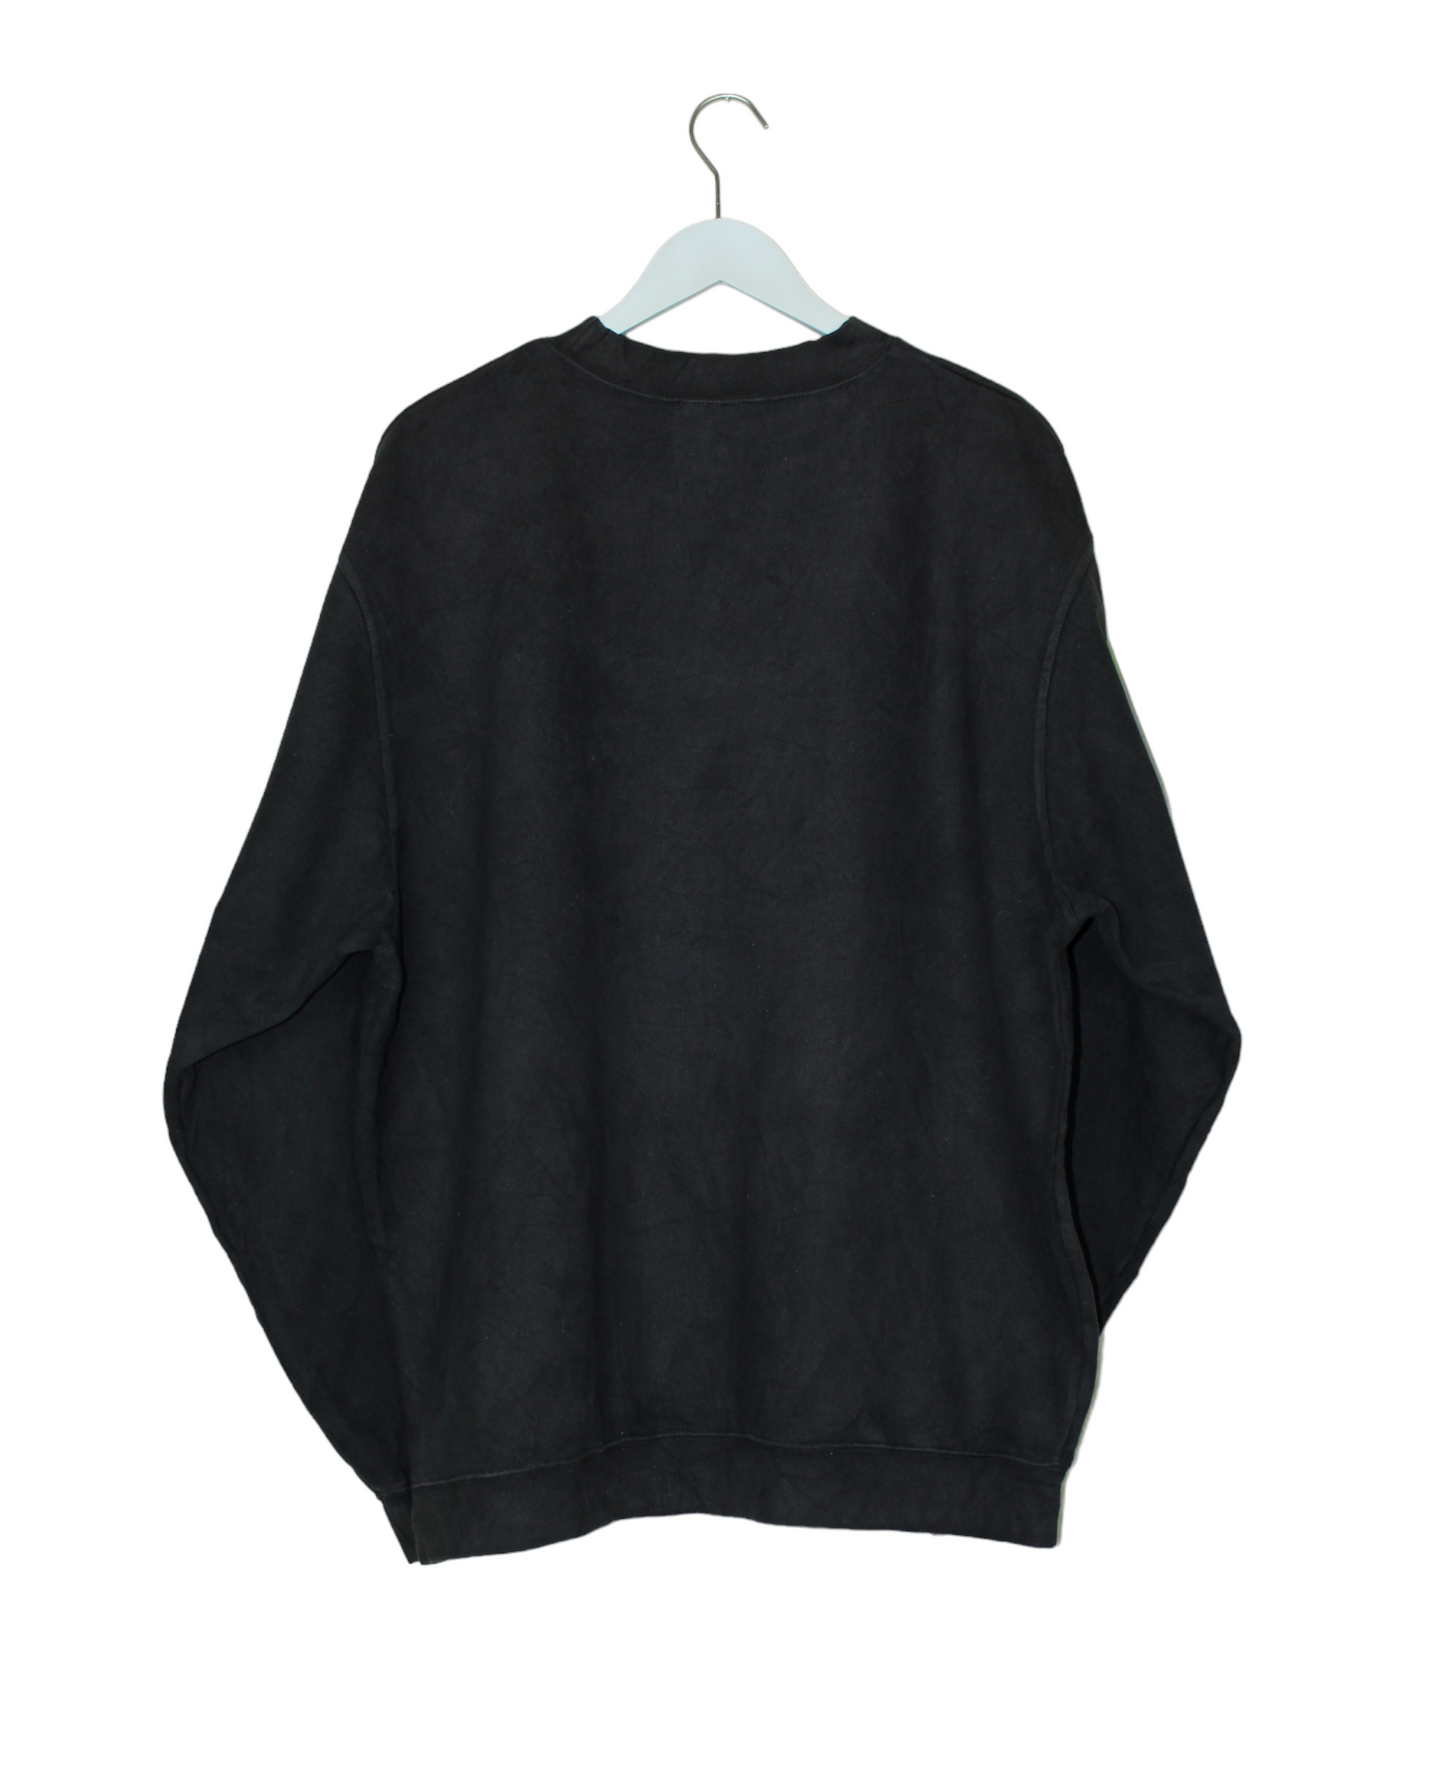 Adidas Basic Sweater schwarz